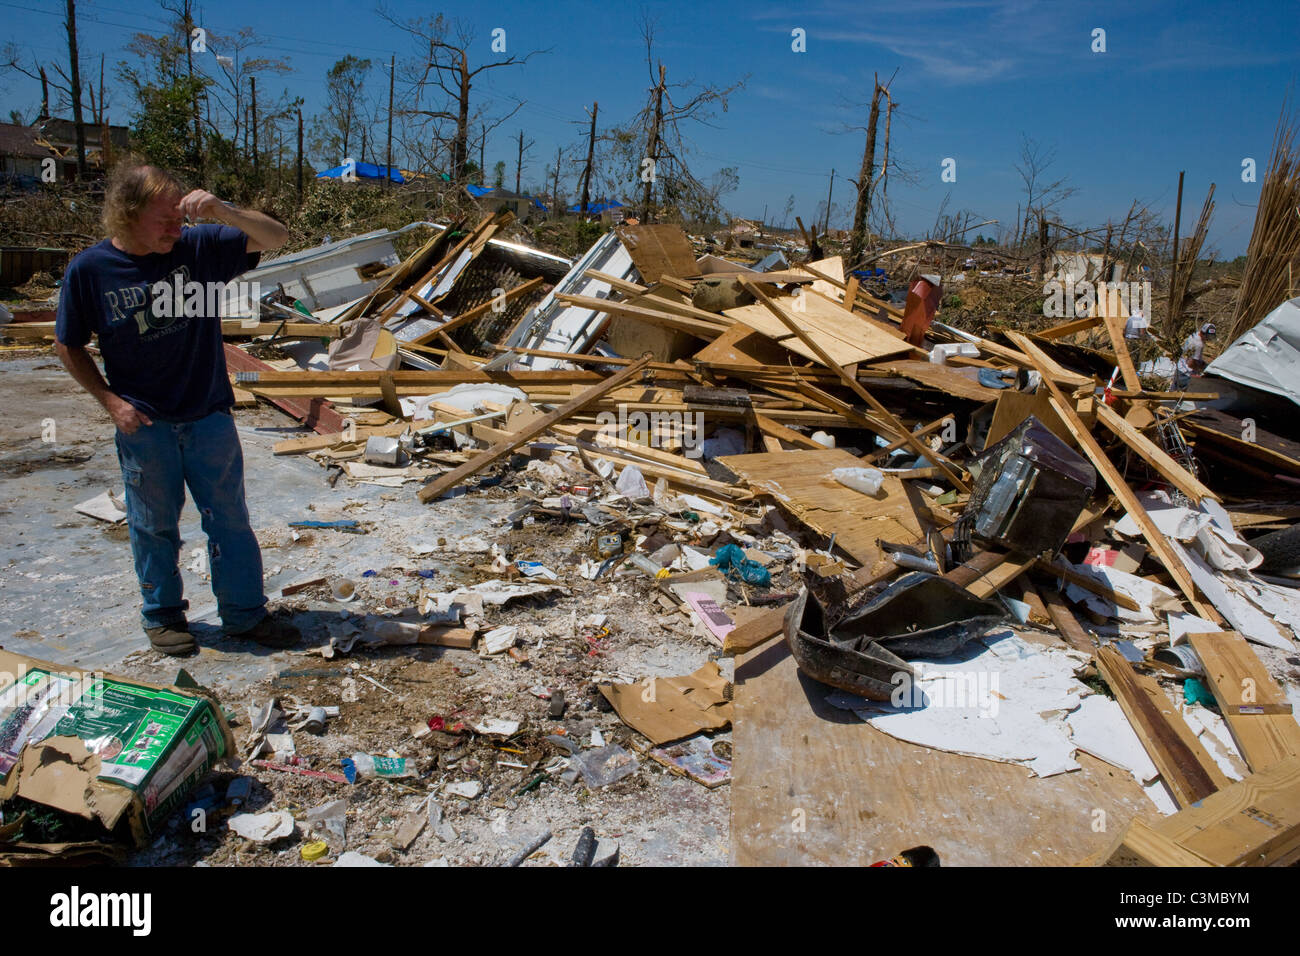 A man surveys devastation of home after worst tornado in history, Pleasant Grove, Alabama, USA, May 2011 Stock Photo